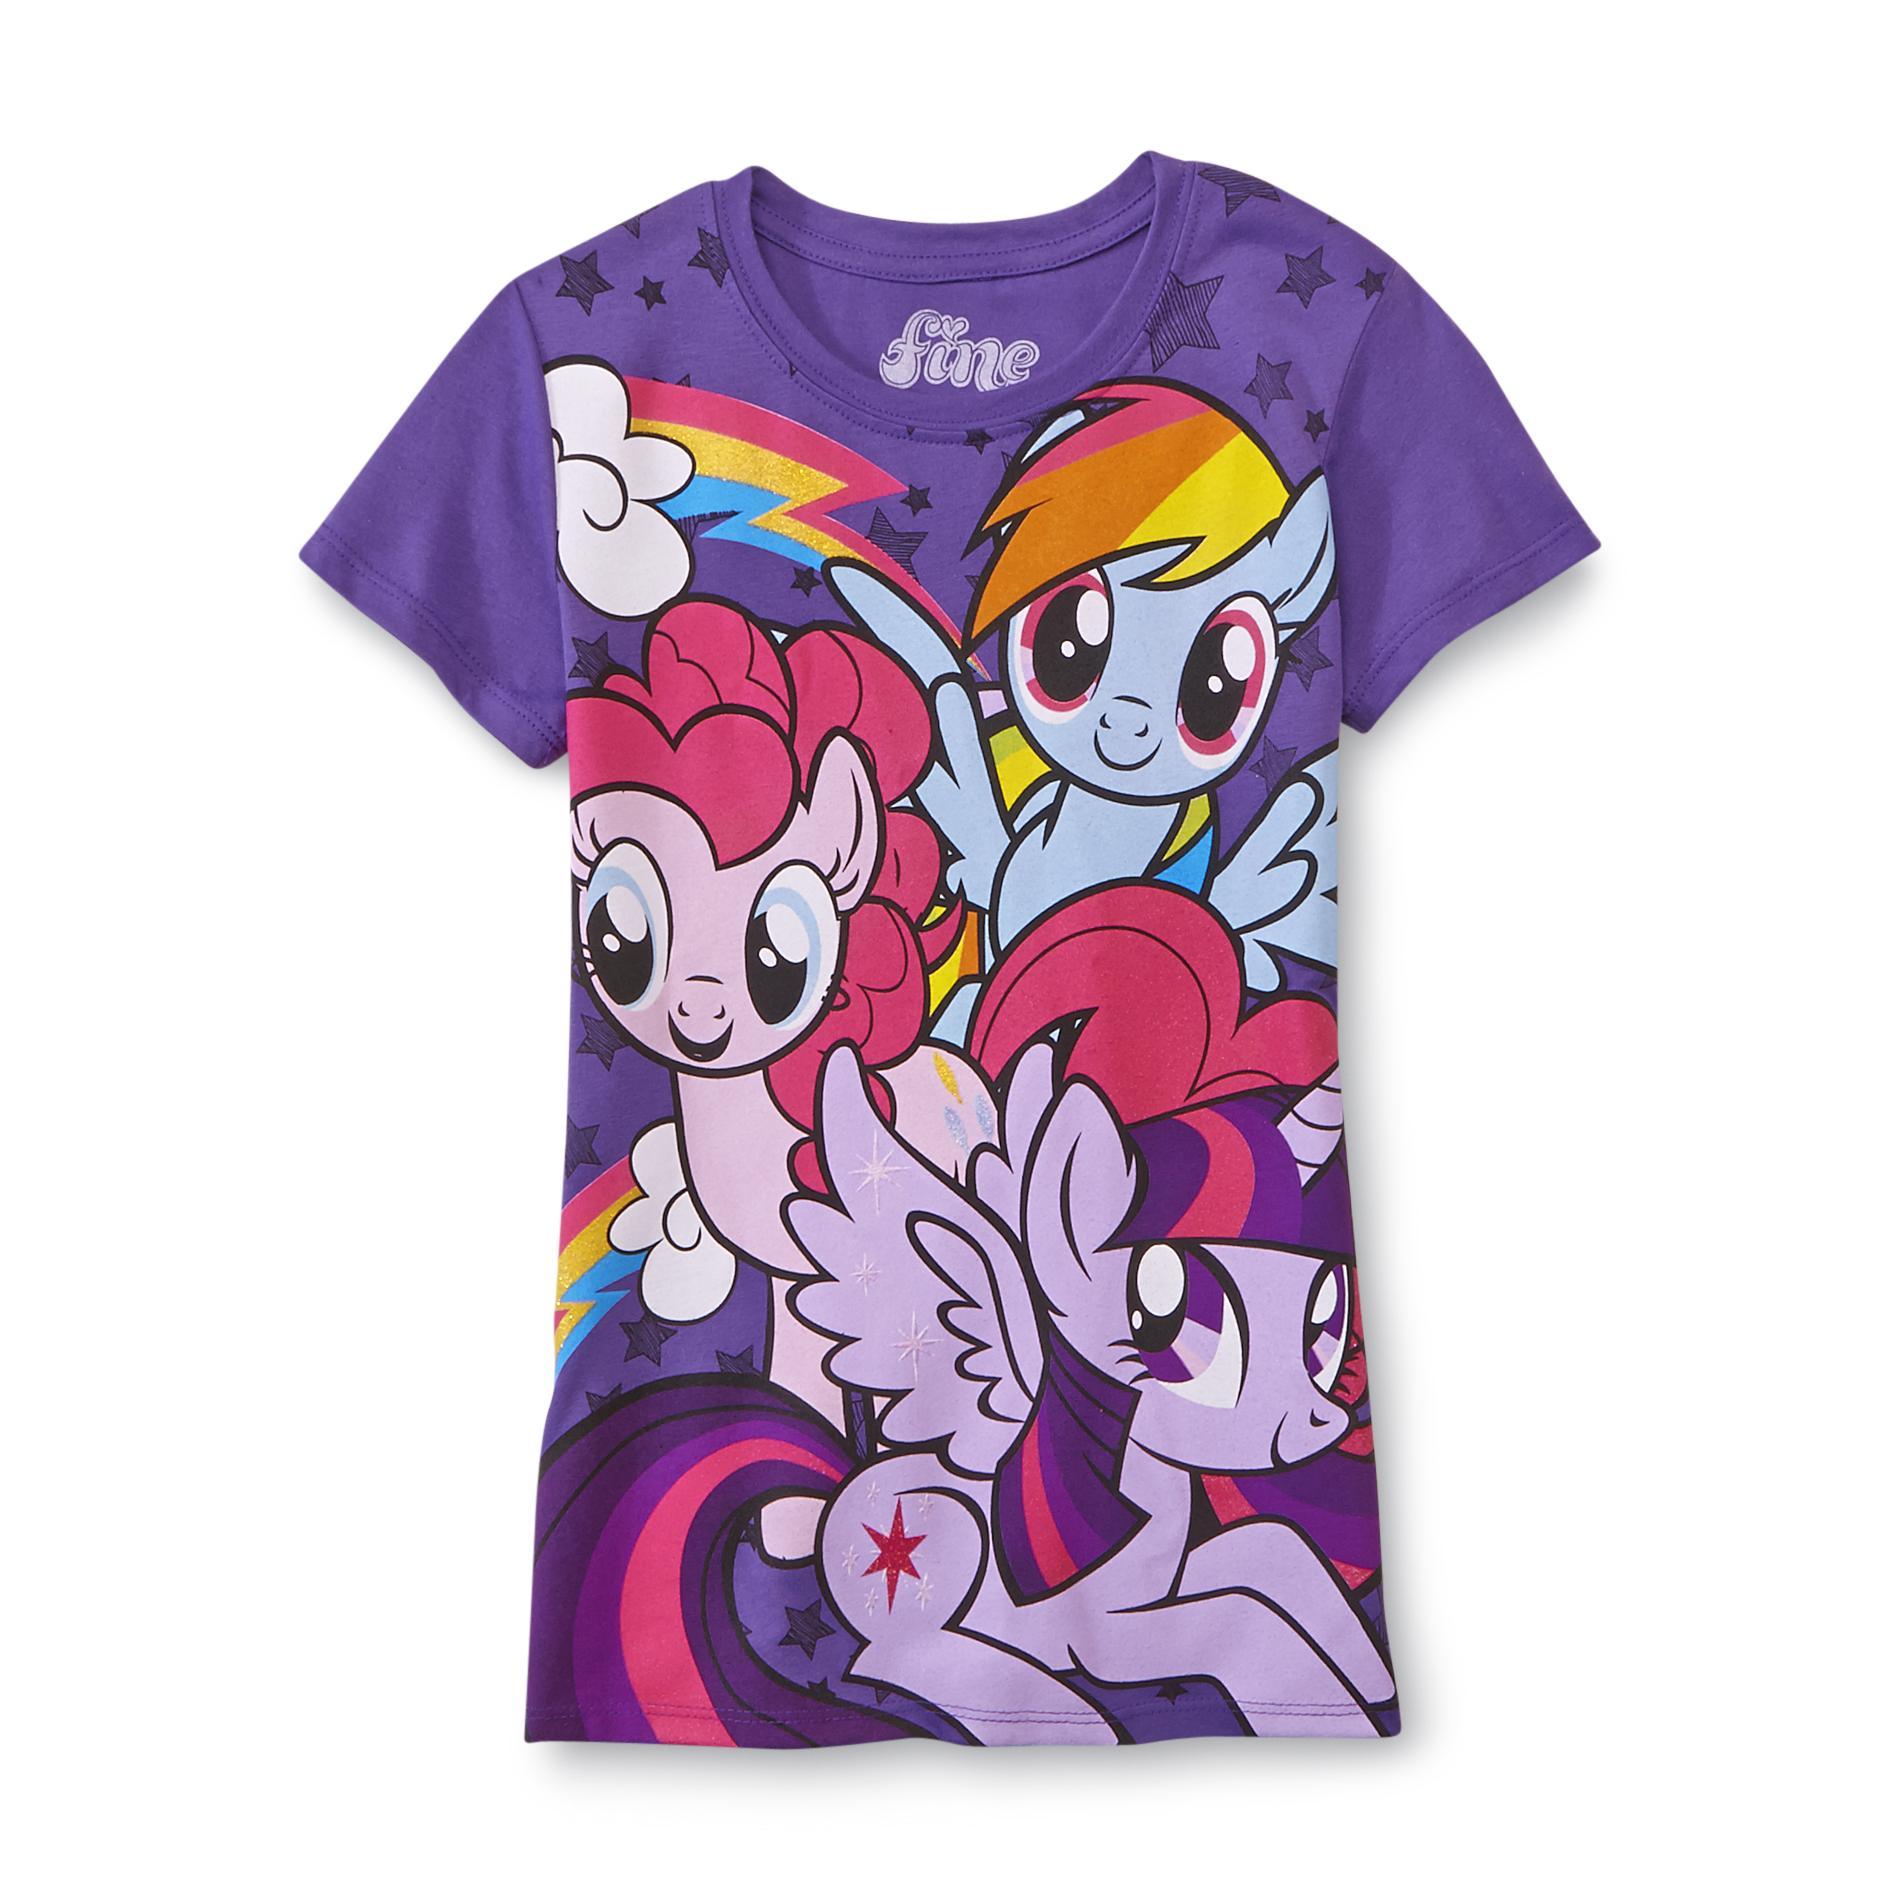 My Little Pony Girl's Glittered Graphic T-Shirt